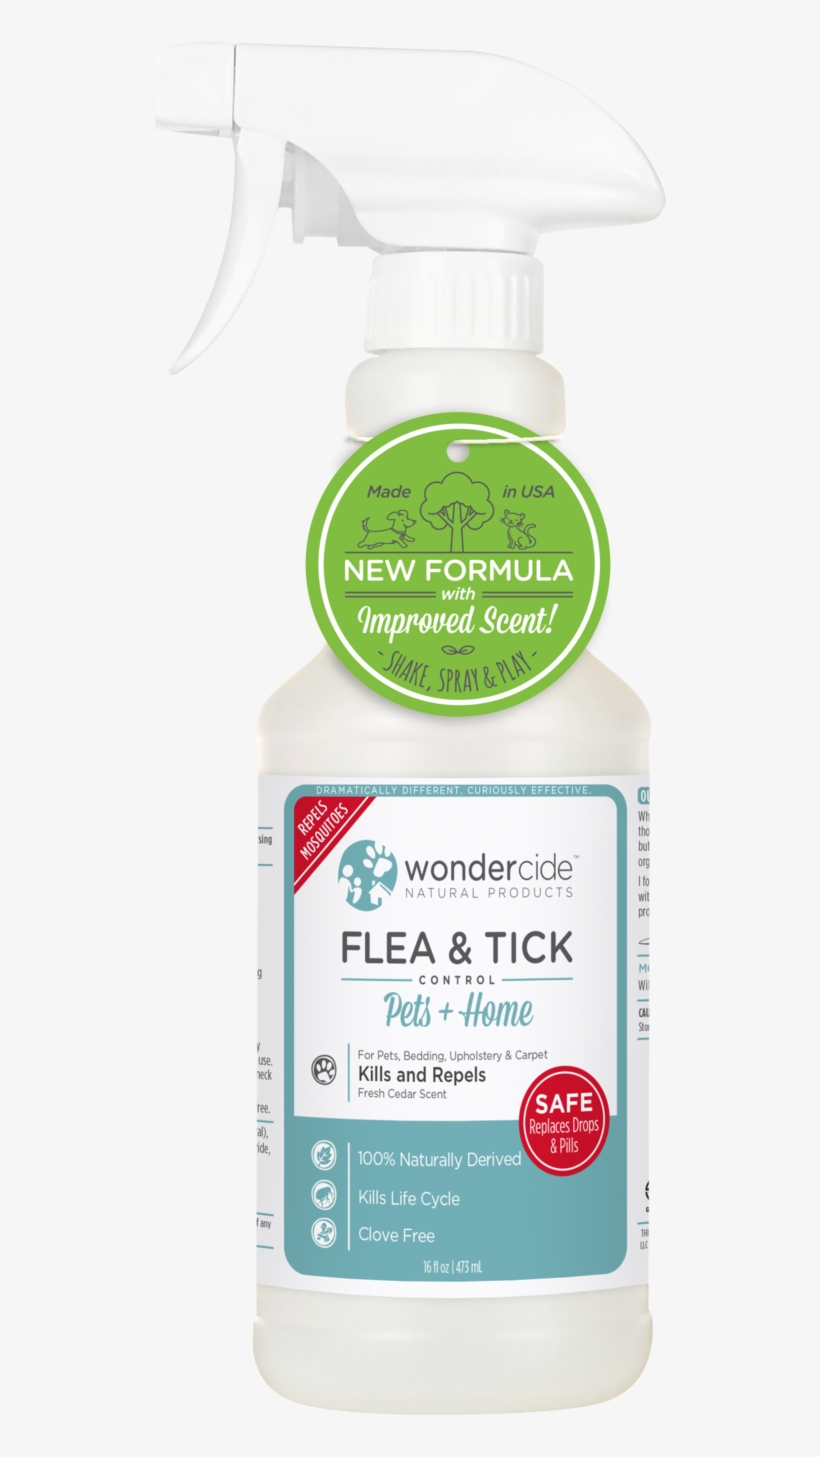 Flea & Tick Control For Pets Home - Wondercide Flea/tick Pet & Home Lemongrass Spray, transparent png #922029